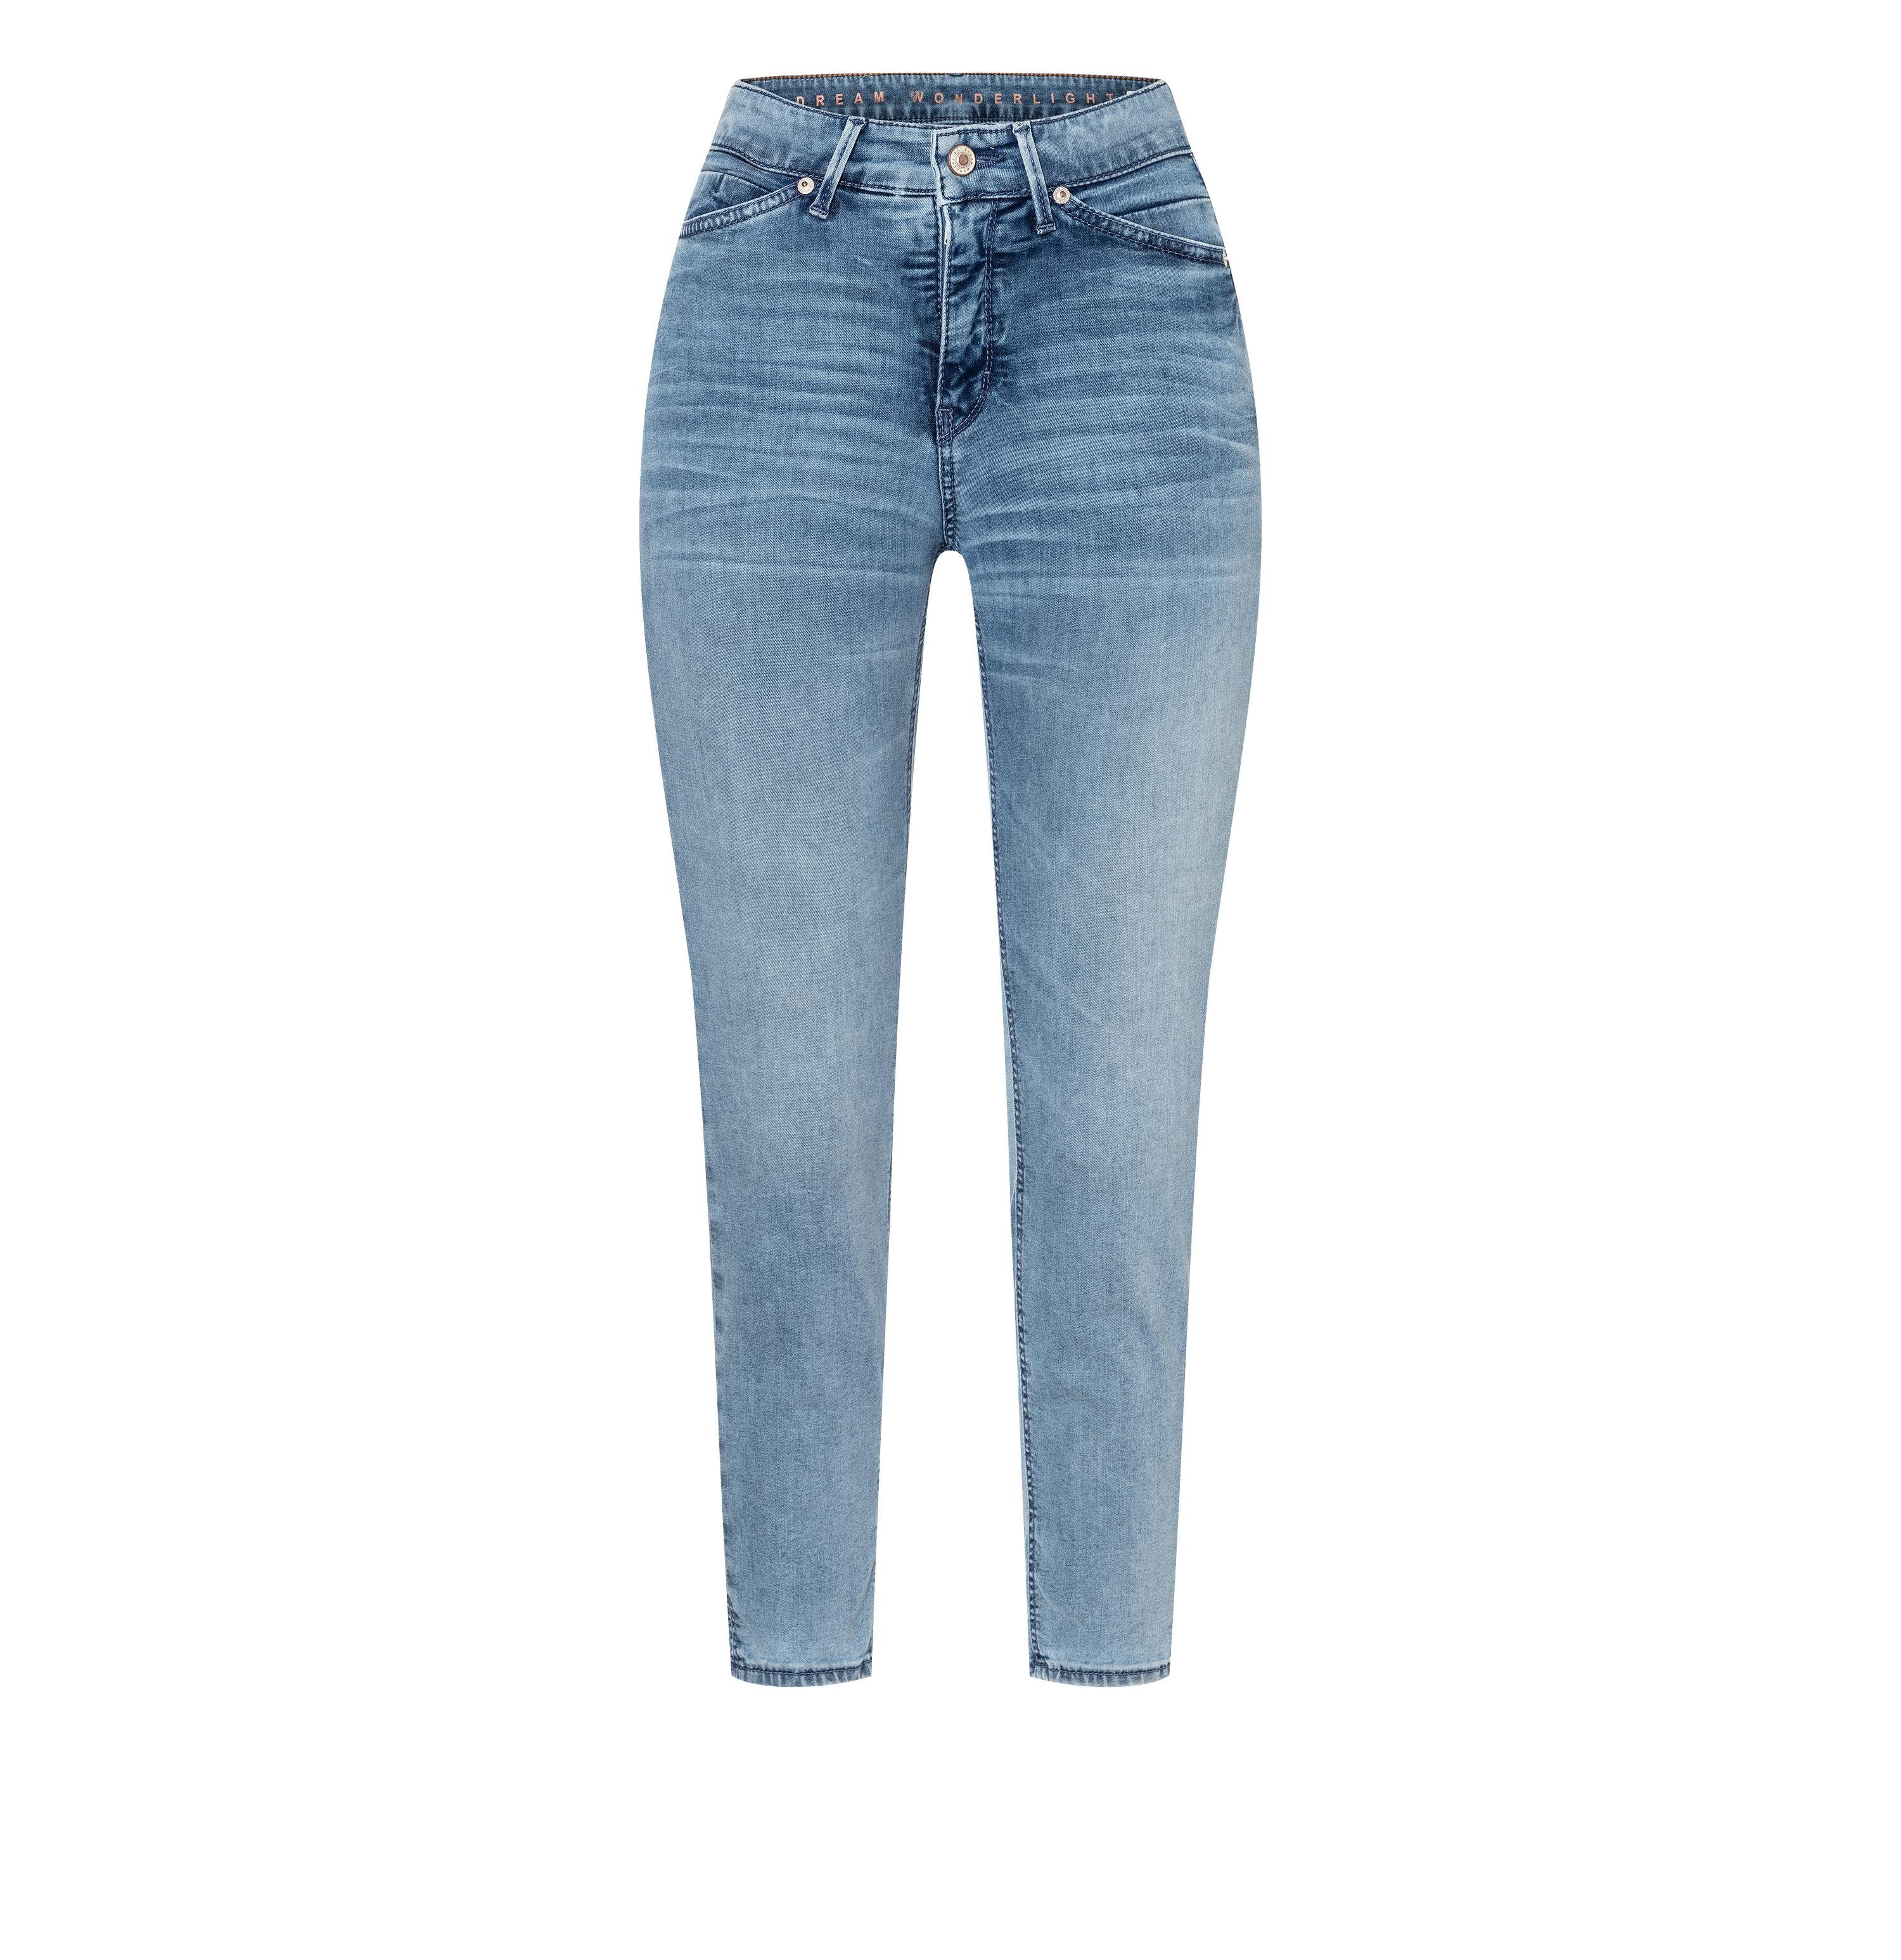 MAC Stretch-Jeans MAC fashion wash WONDERLIGH SUMMER D242 bleached DREAM 5492-90-0351L 